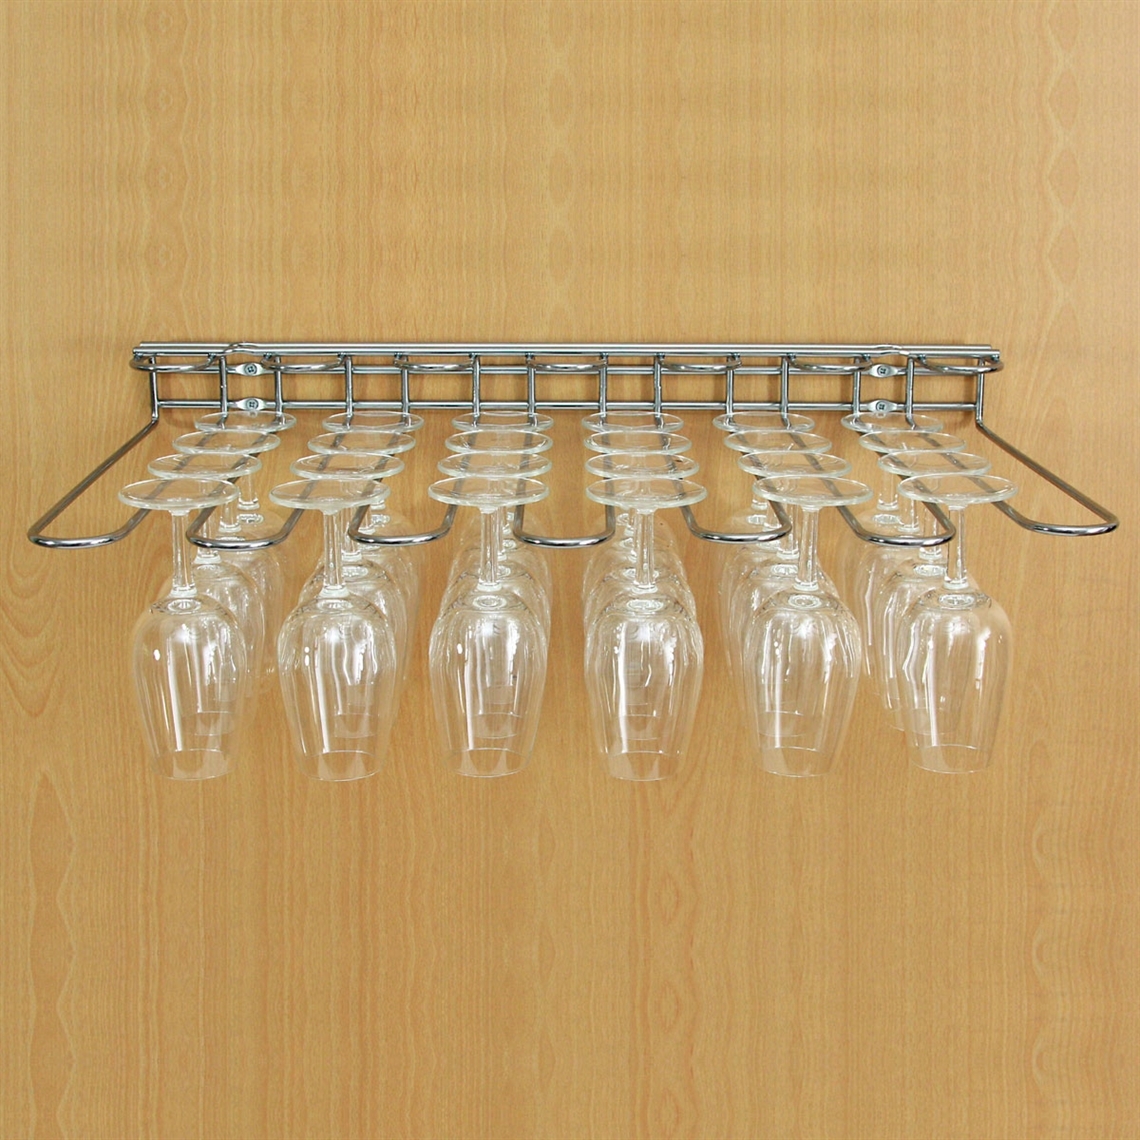 Wine glass rack wall